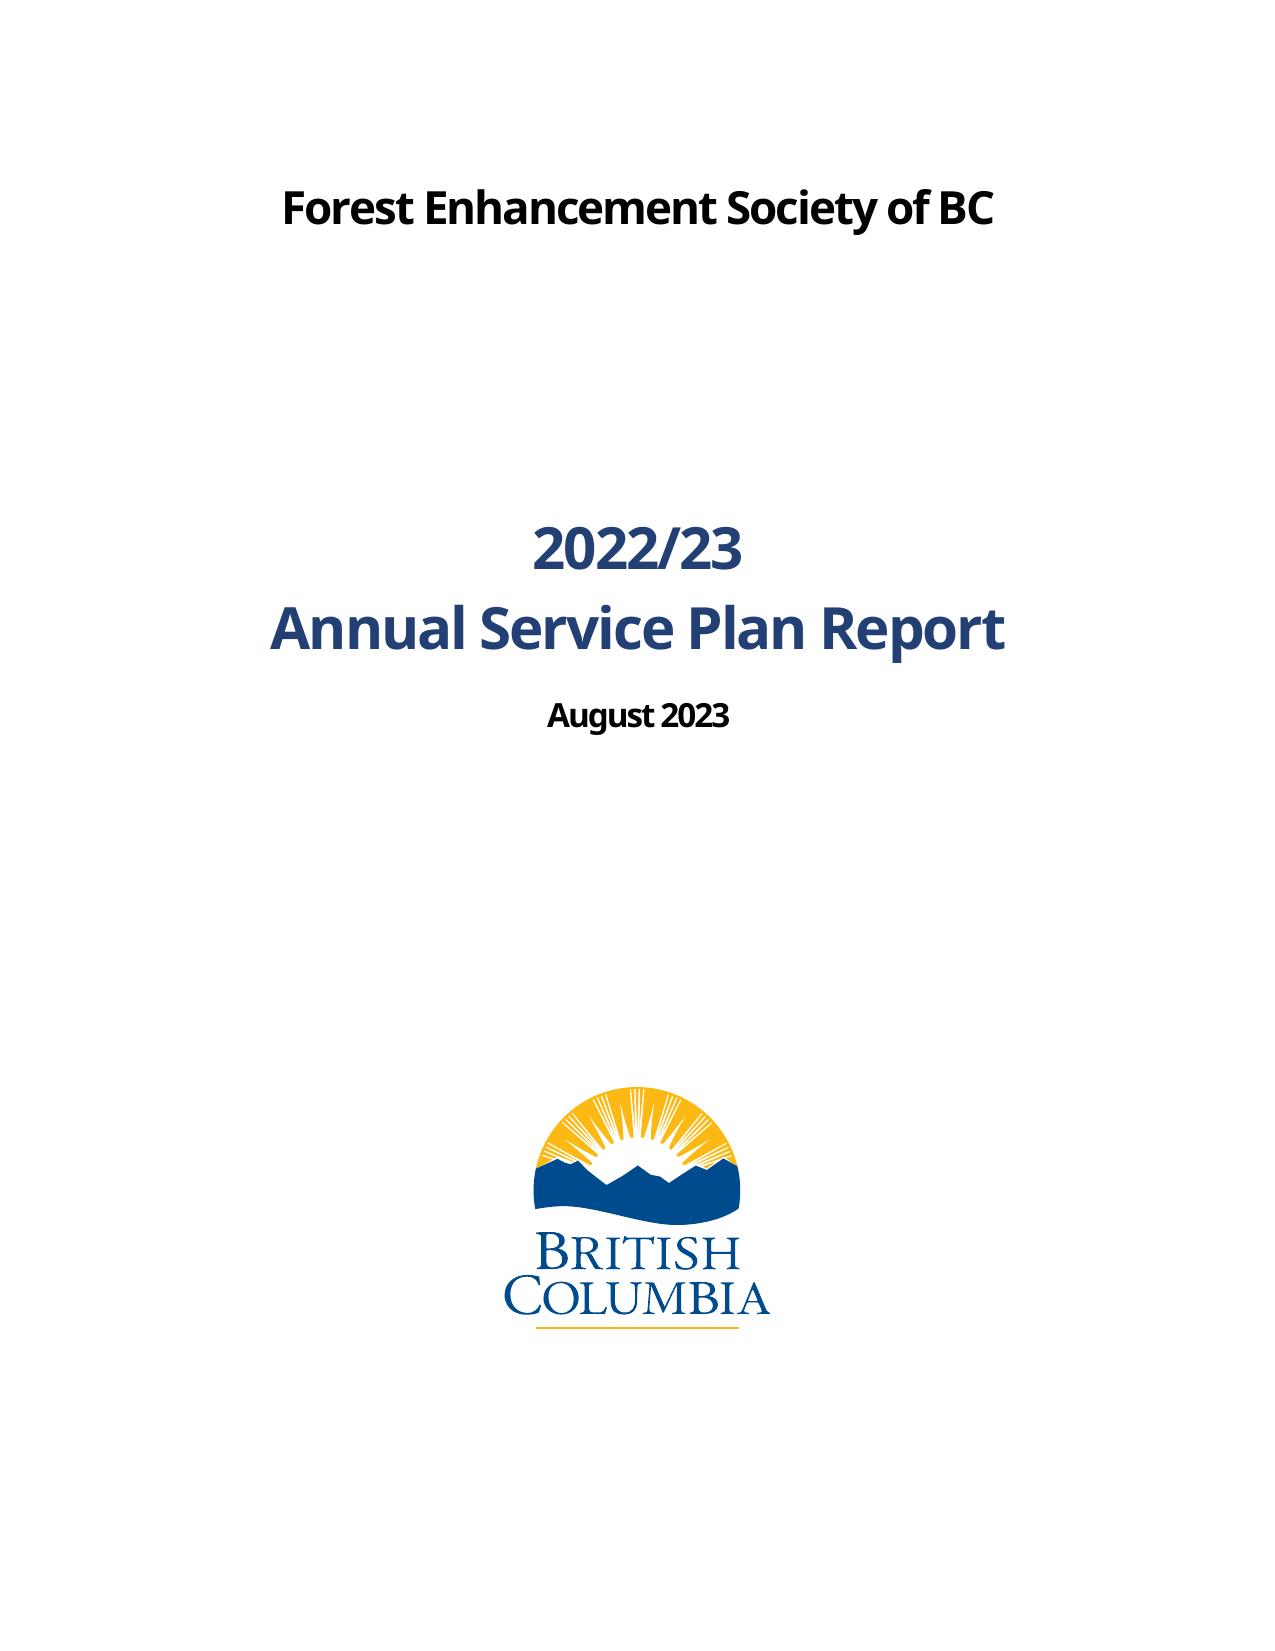 FESBC 2023 Annual Report